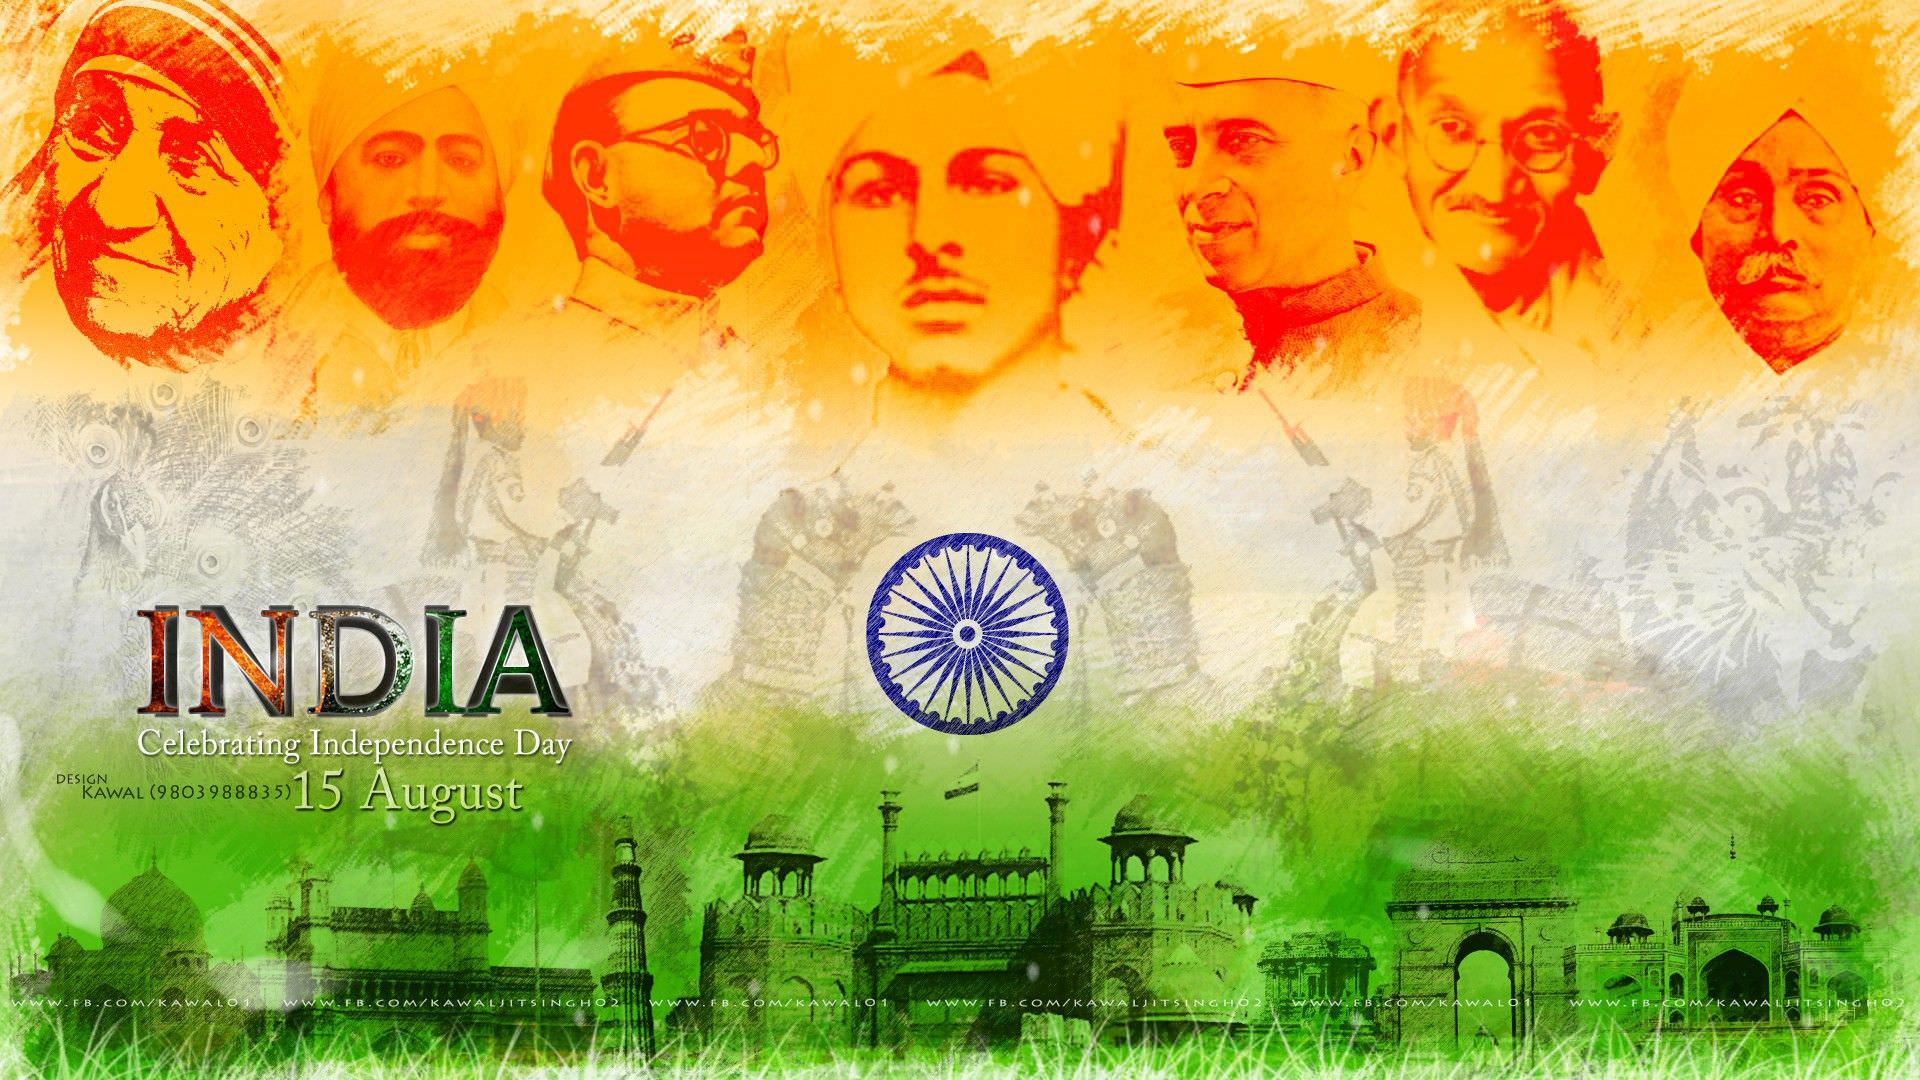 Download Flag of India 4K 2020 Mobile Wallpaper 